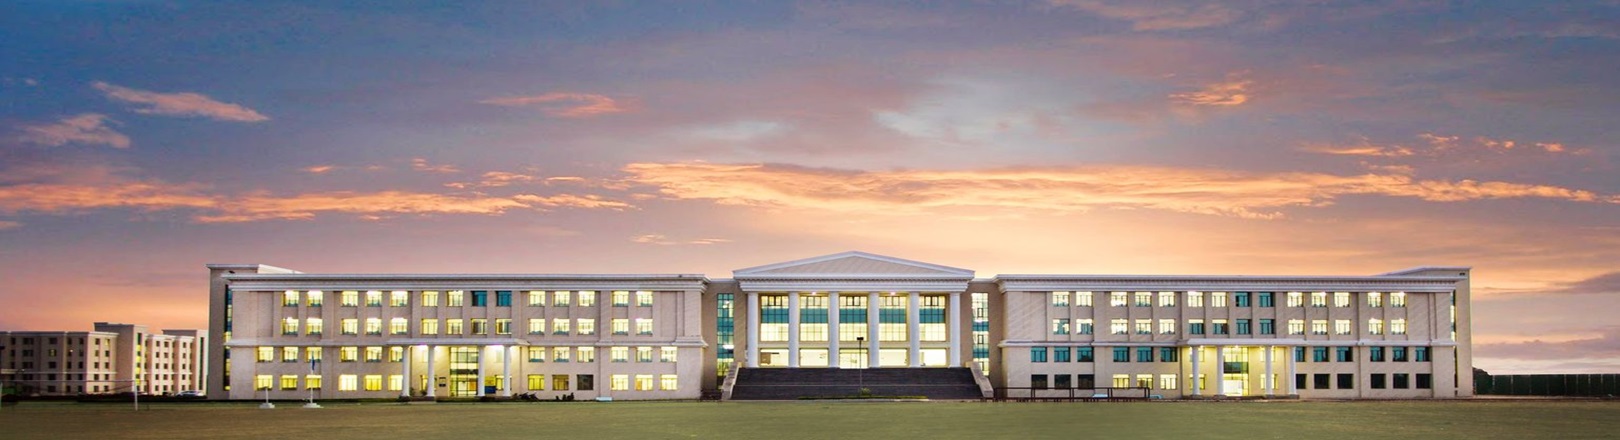 Amity University Chhattisgarh,Raipur (NIBSM)